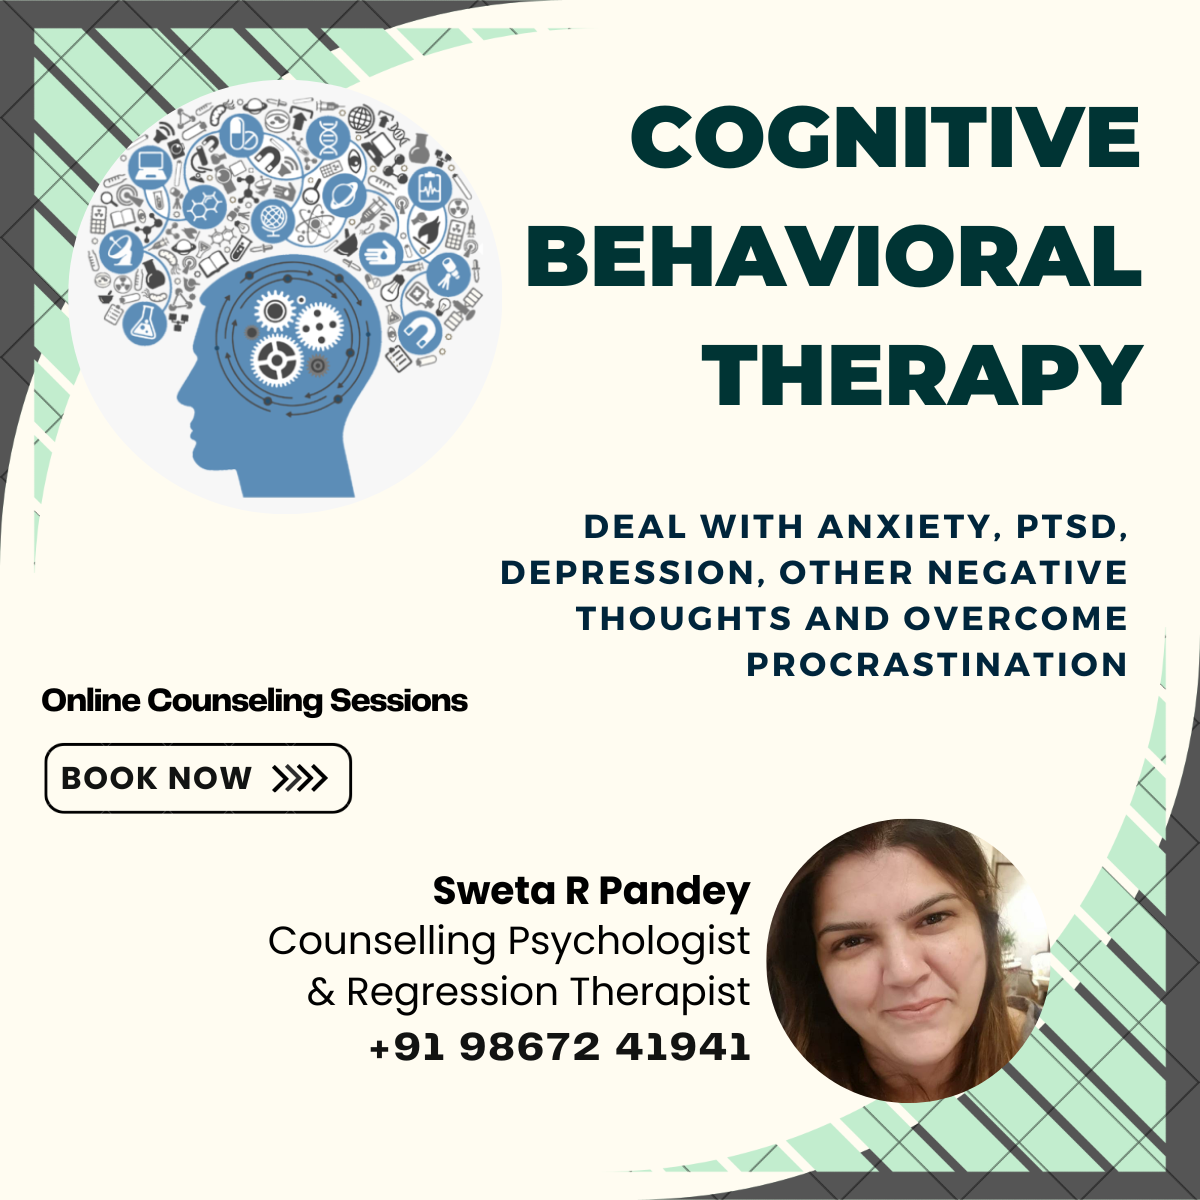 Sweta R Pandey - Cognitive Behavioral Therapy - Nashik